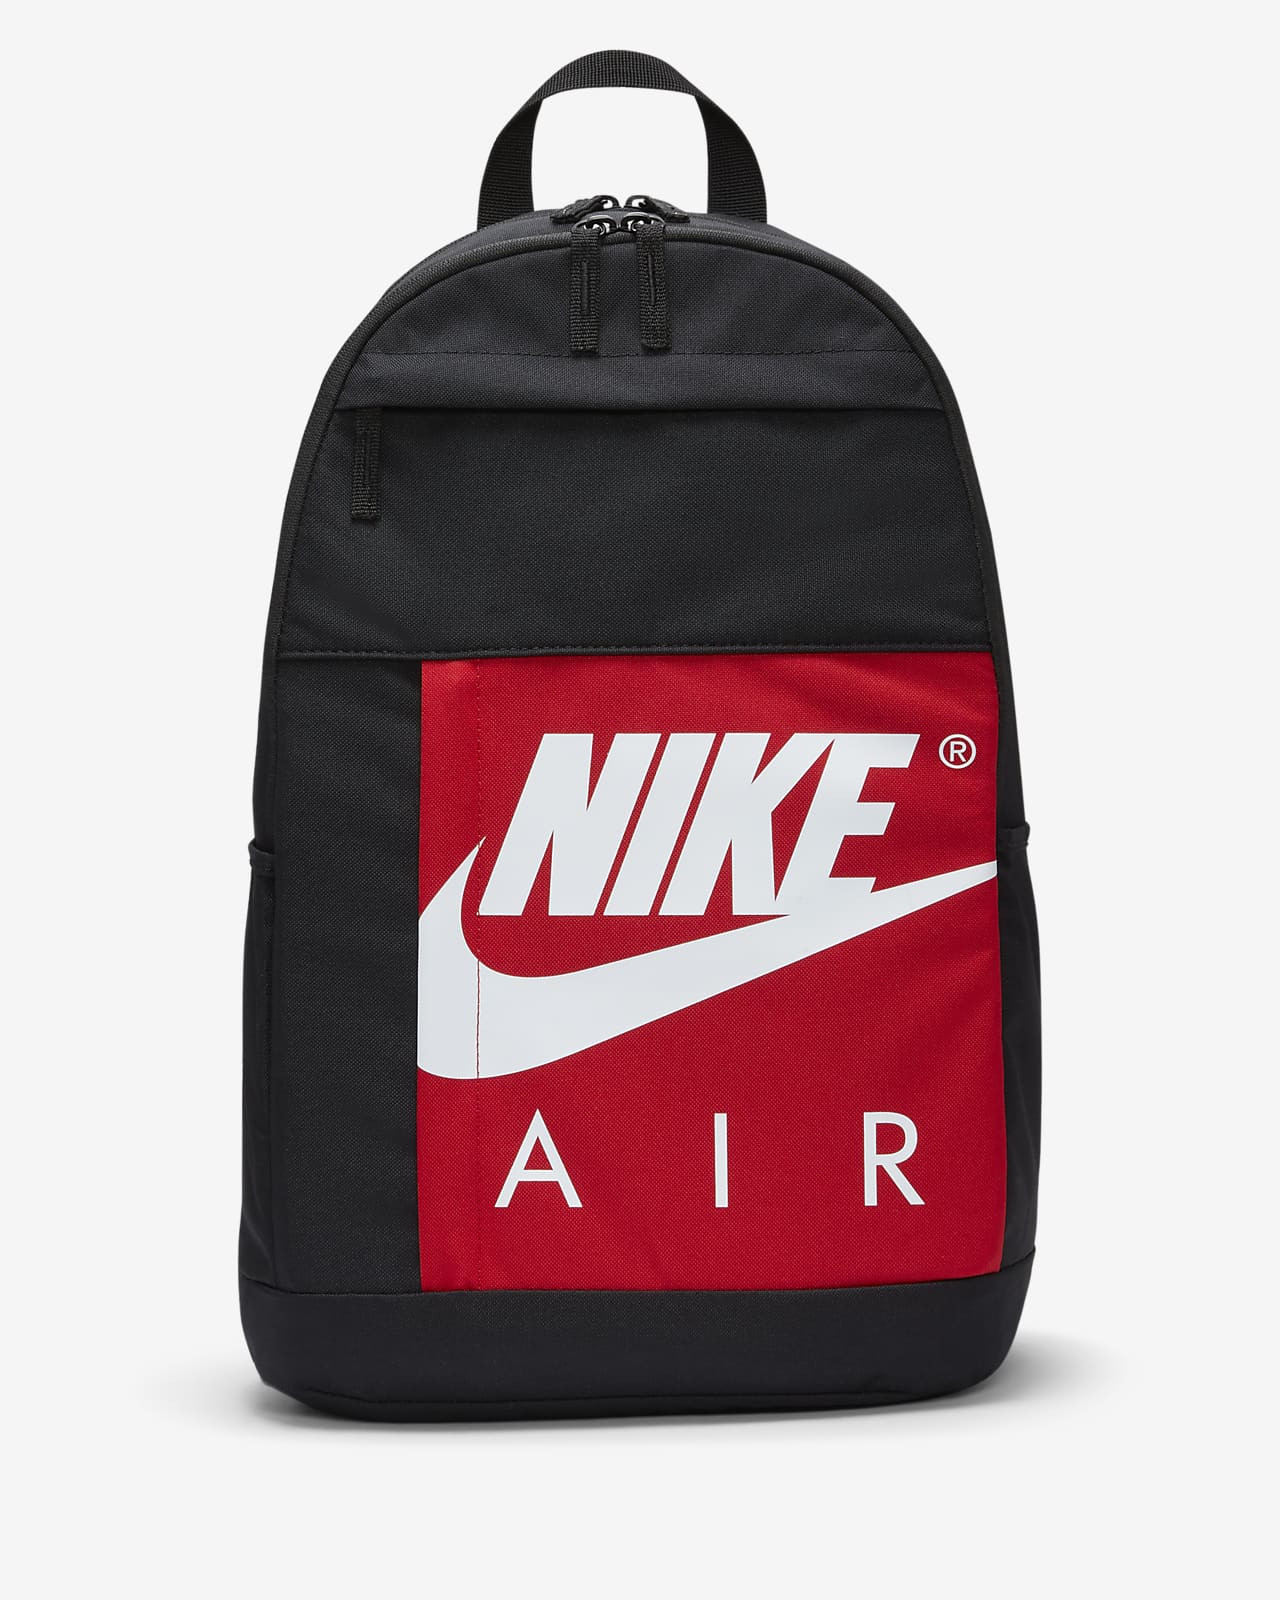 Nike Red Backpacks for Men | Mercari